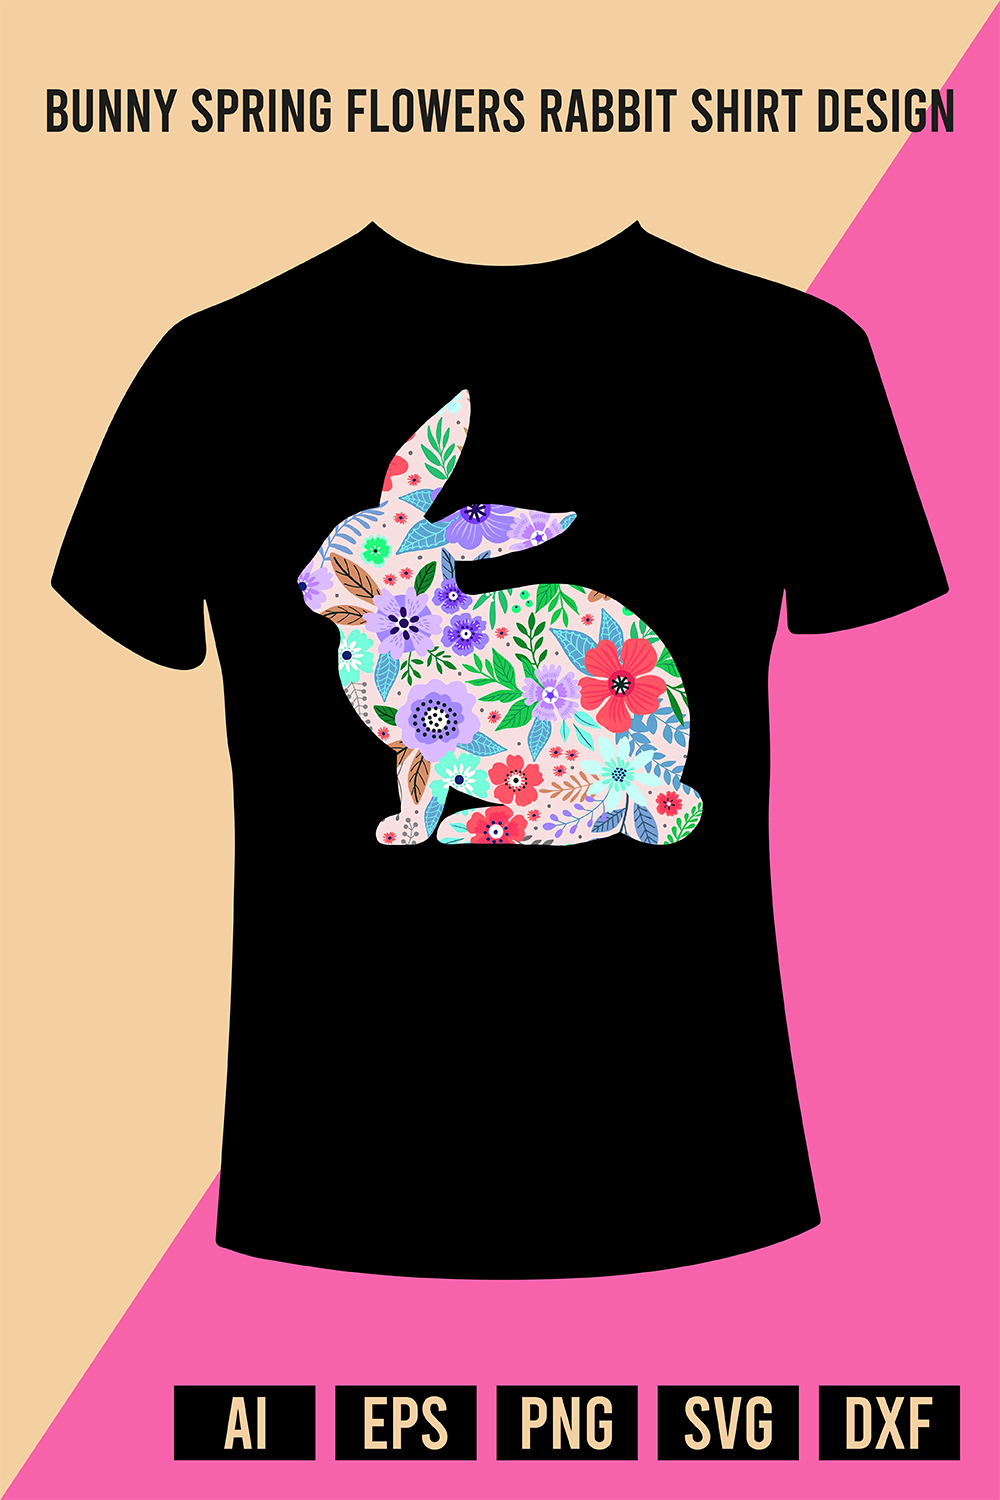 Bunny Spring Flowers Rabbit Shirt Design pinterest preview image.